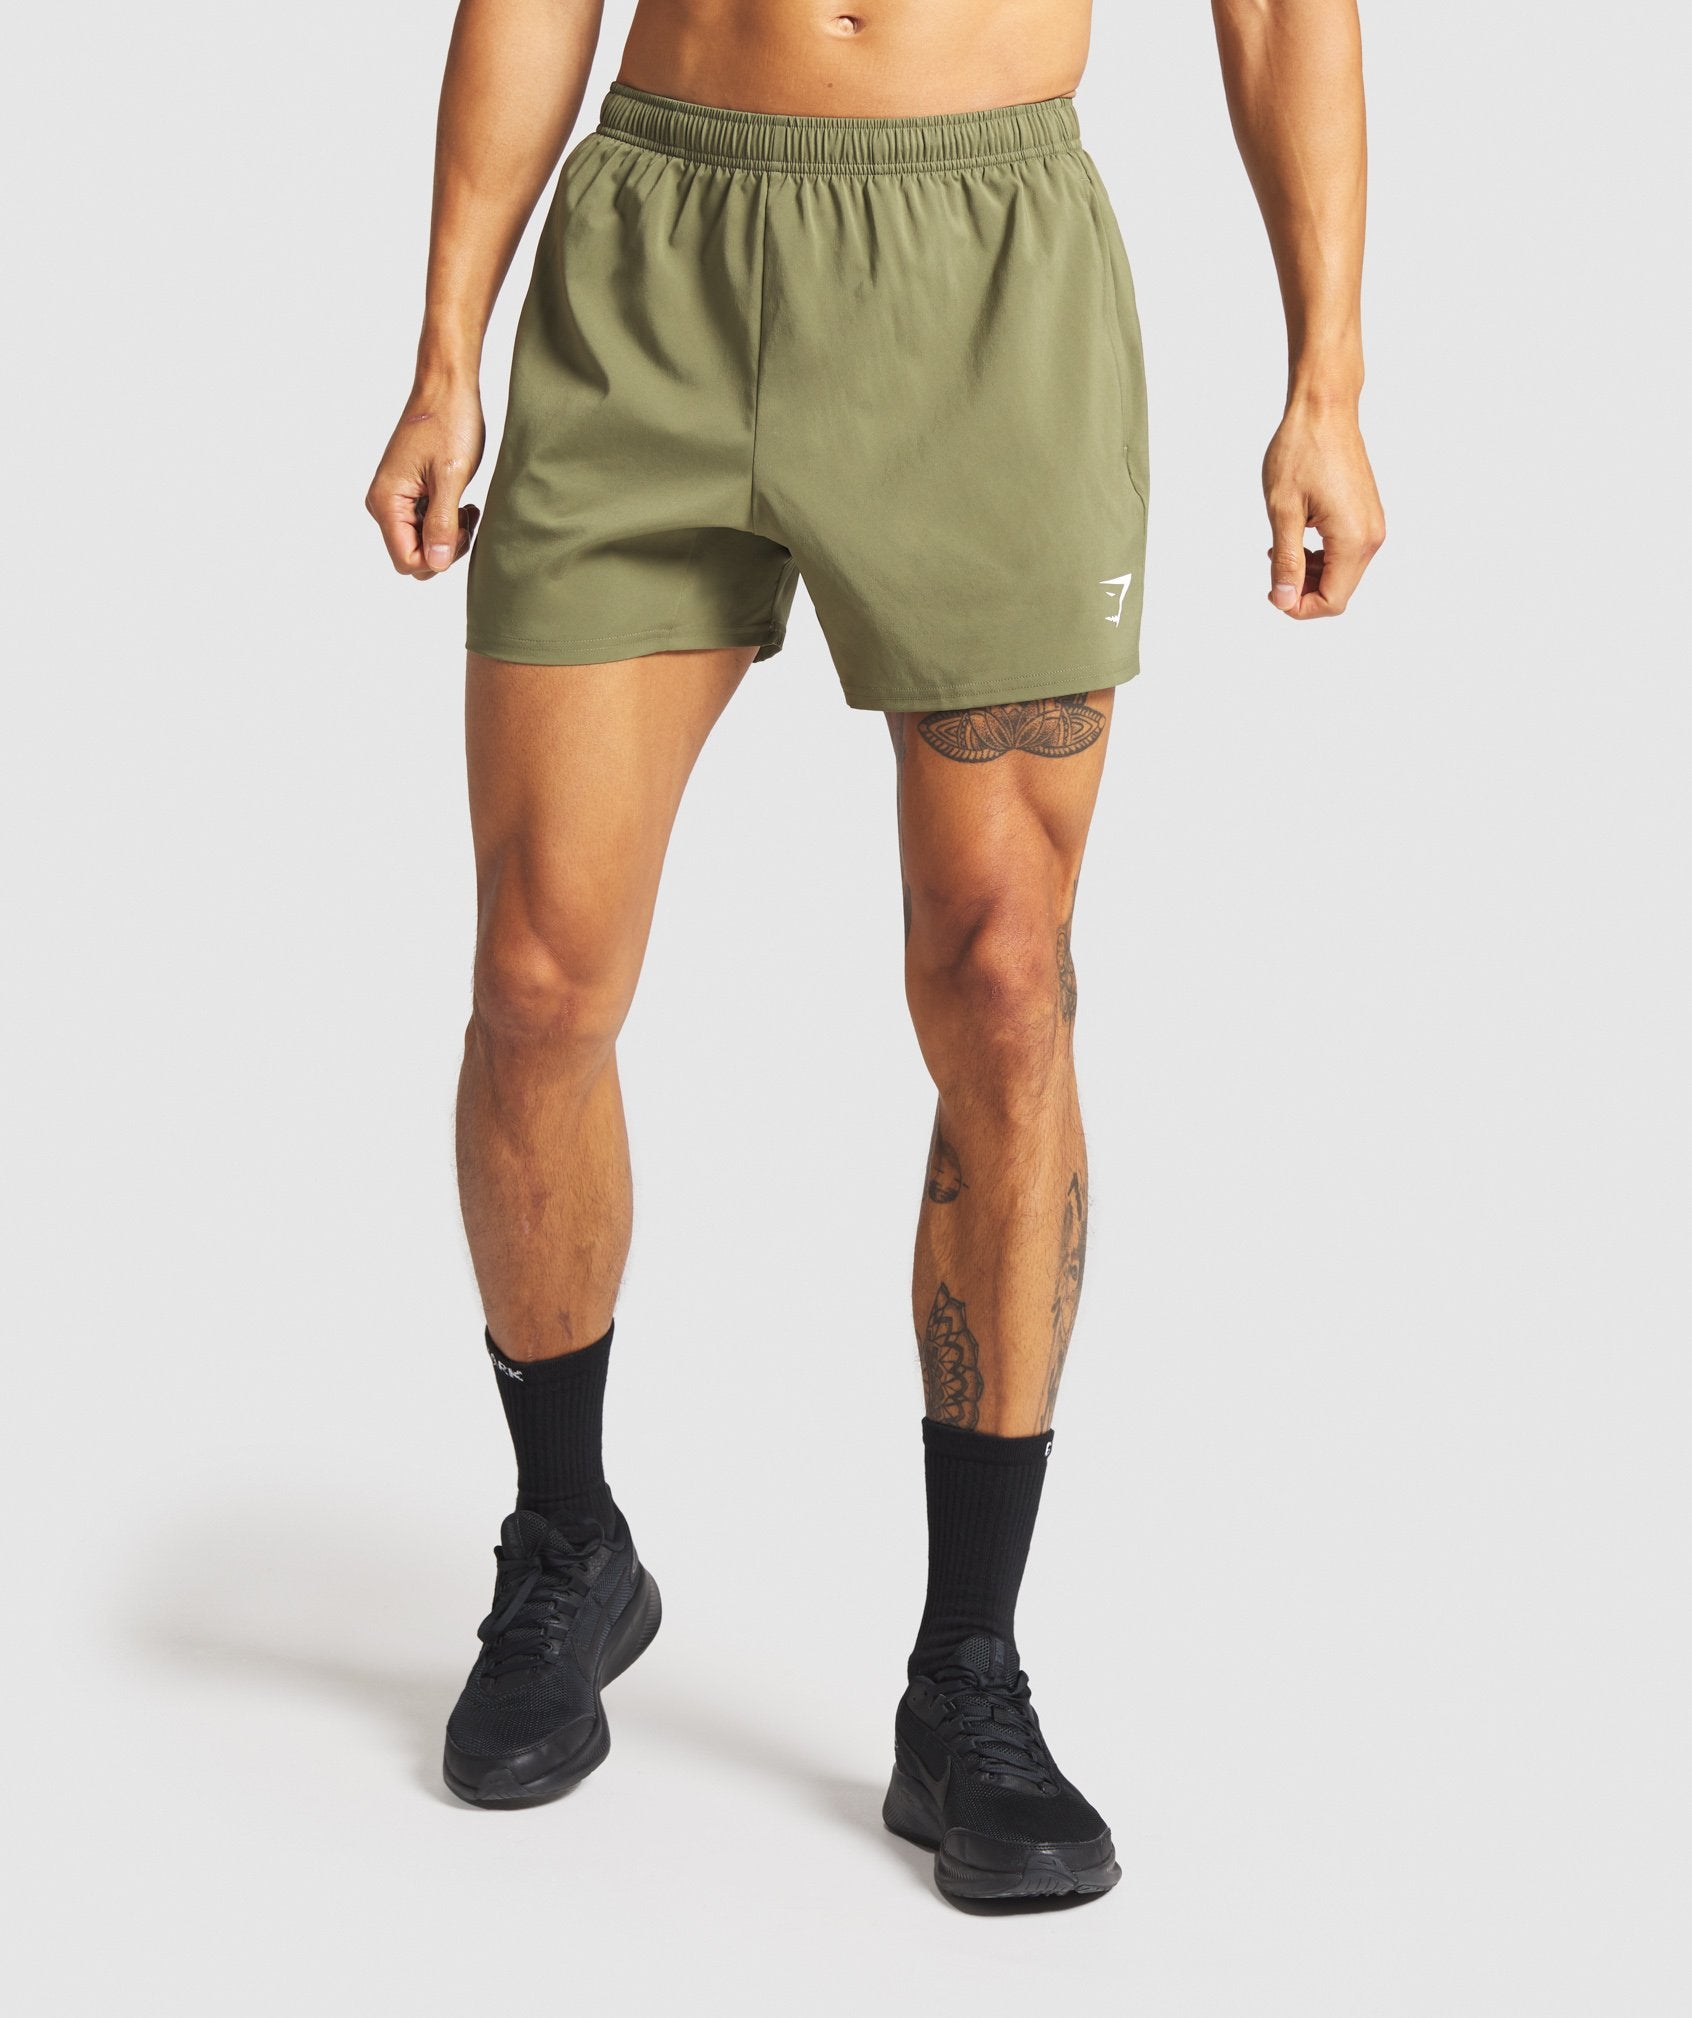 Arrival 5" Zip Pocket Shorts in Dark Green - view 1